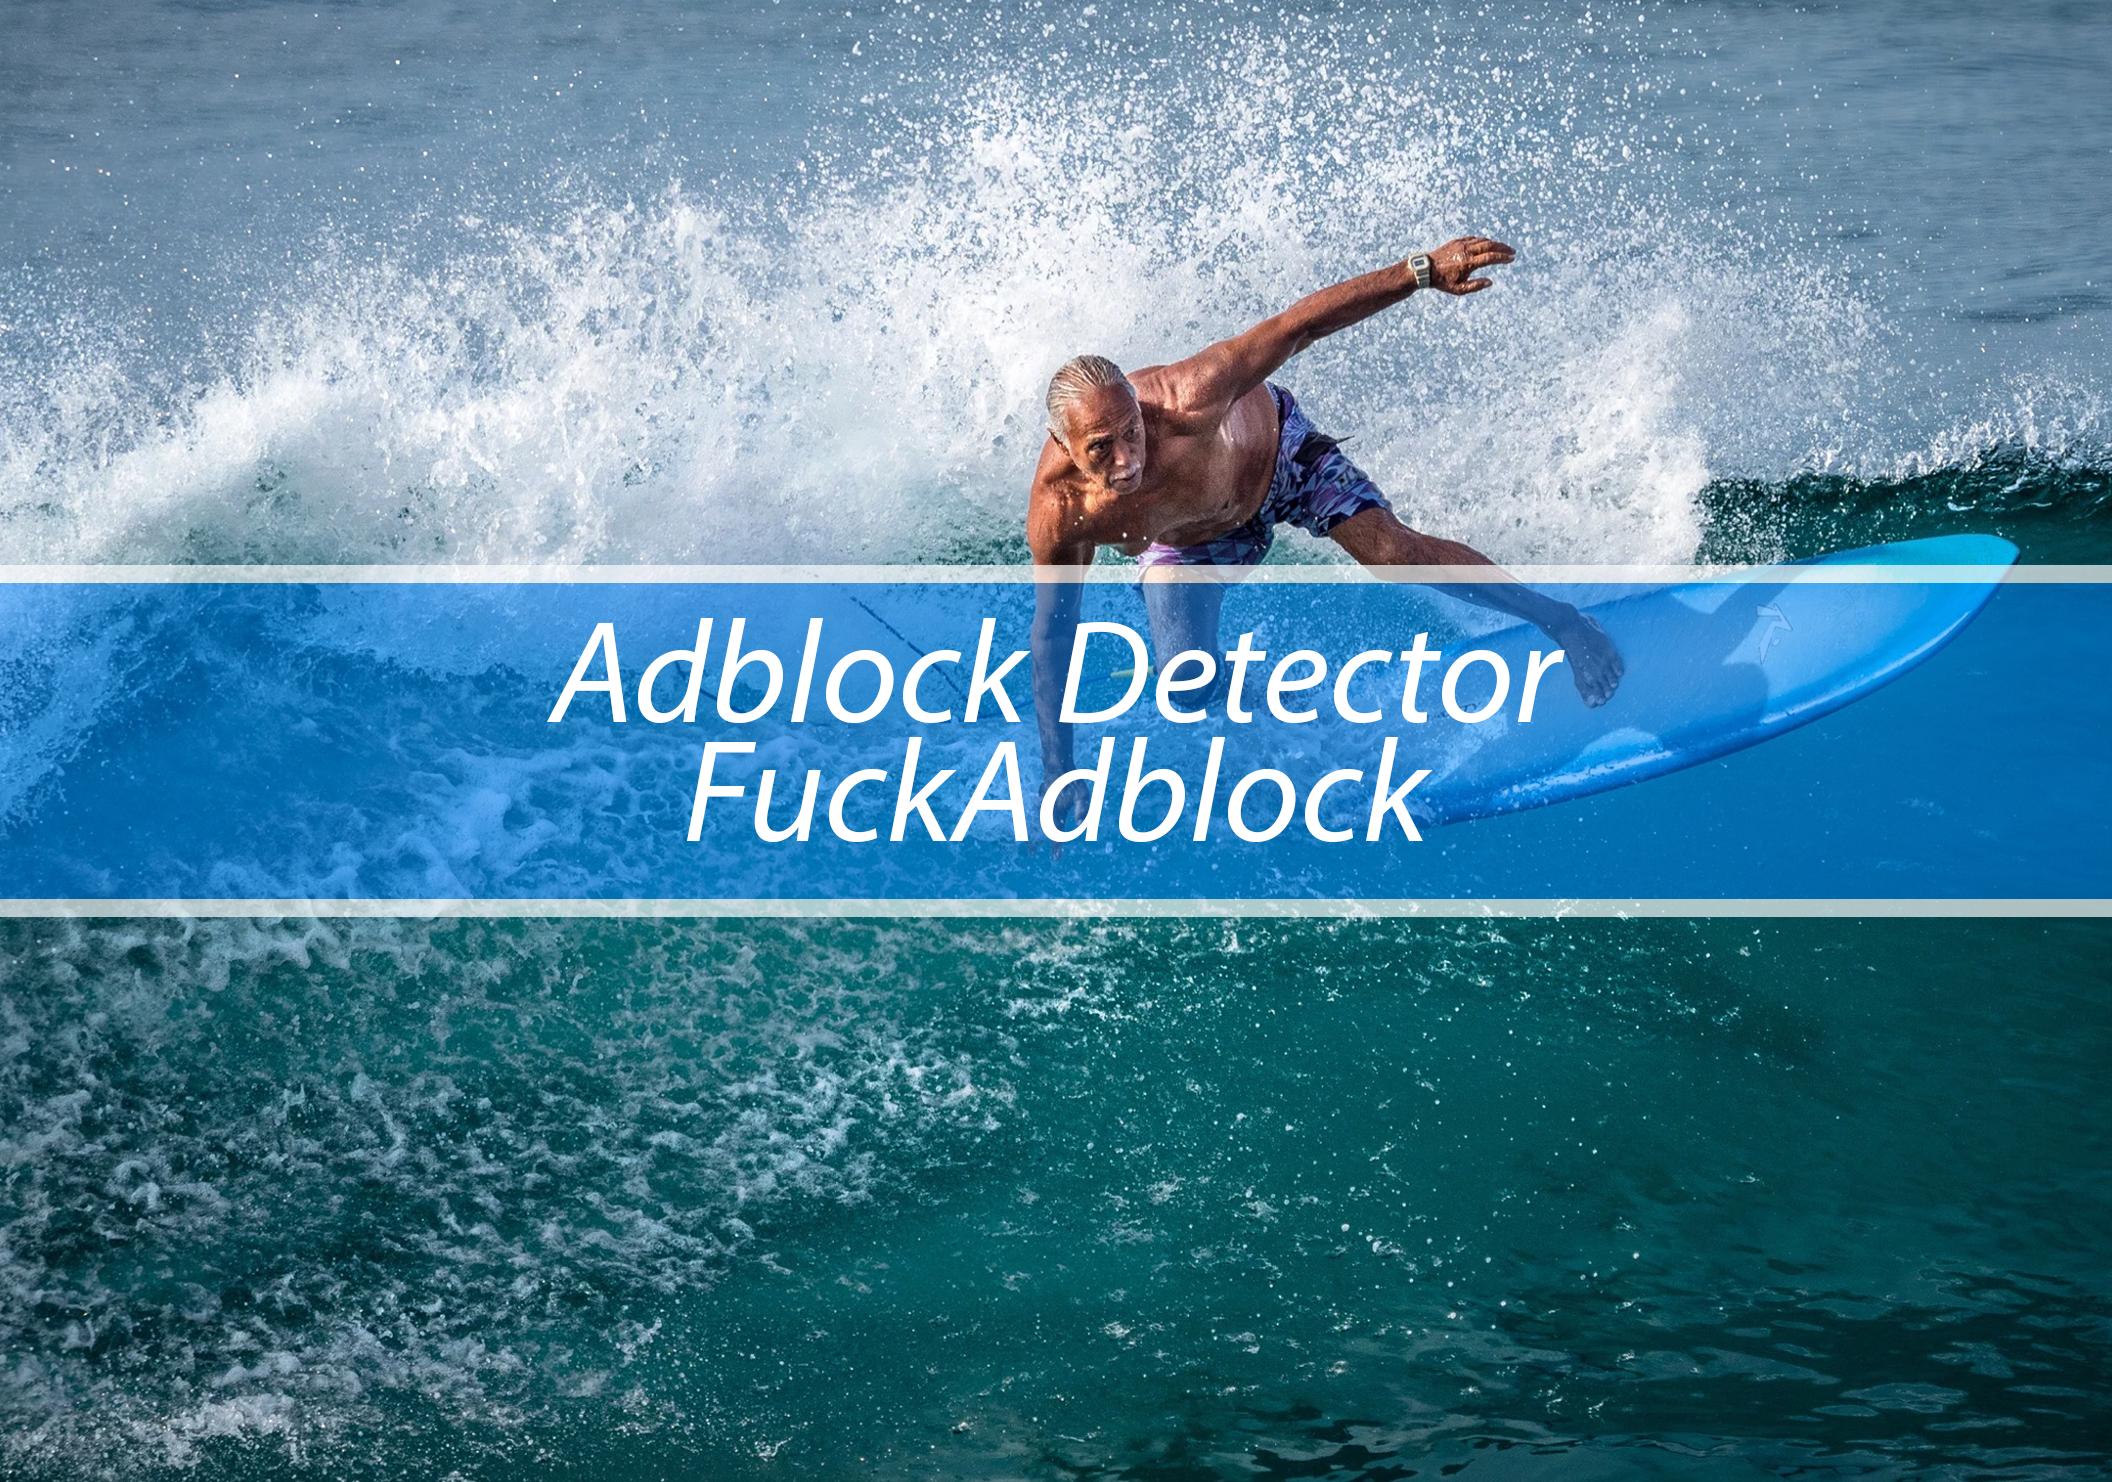 AdBlock Detector FuckAdBlock (BlockAdBlock)